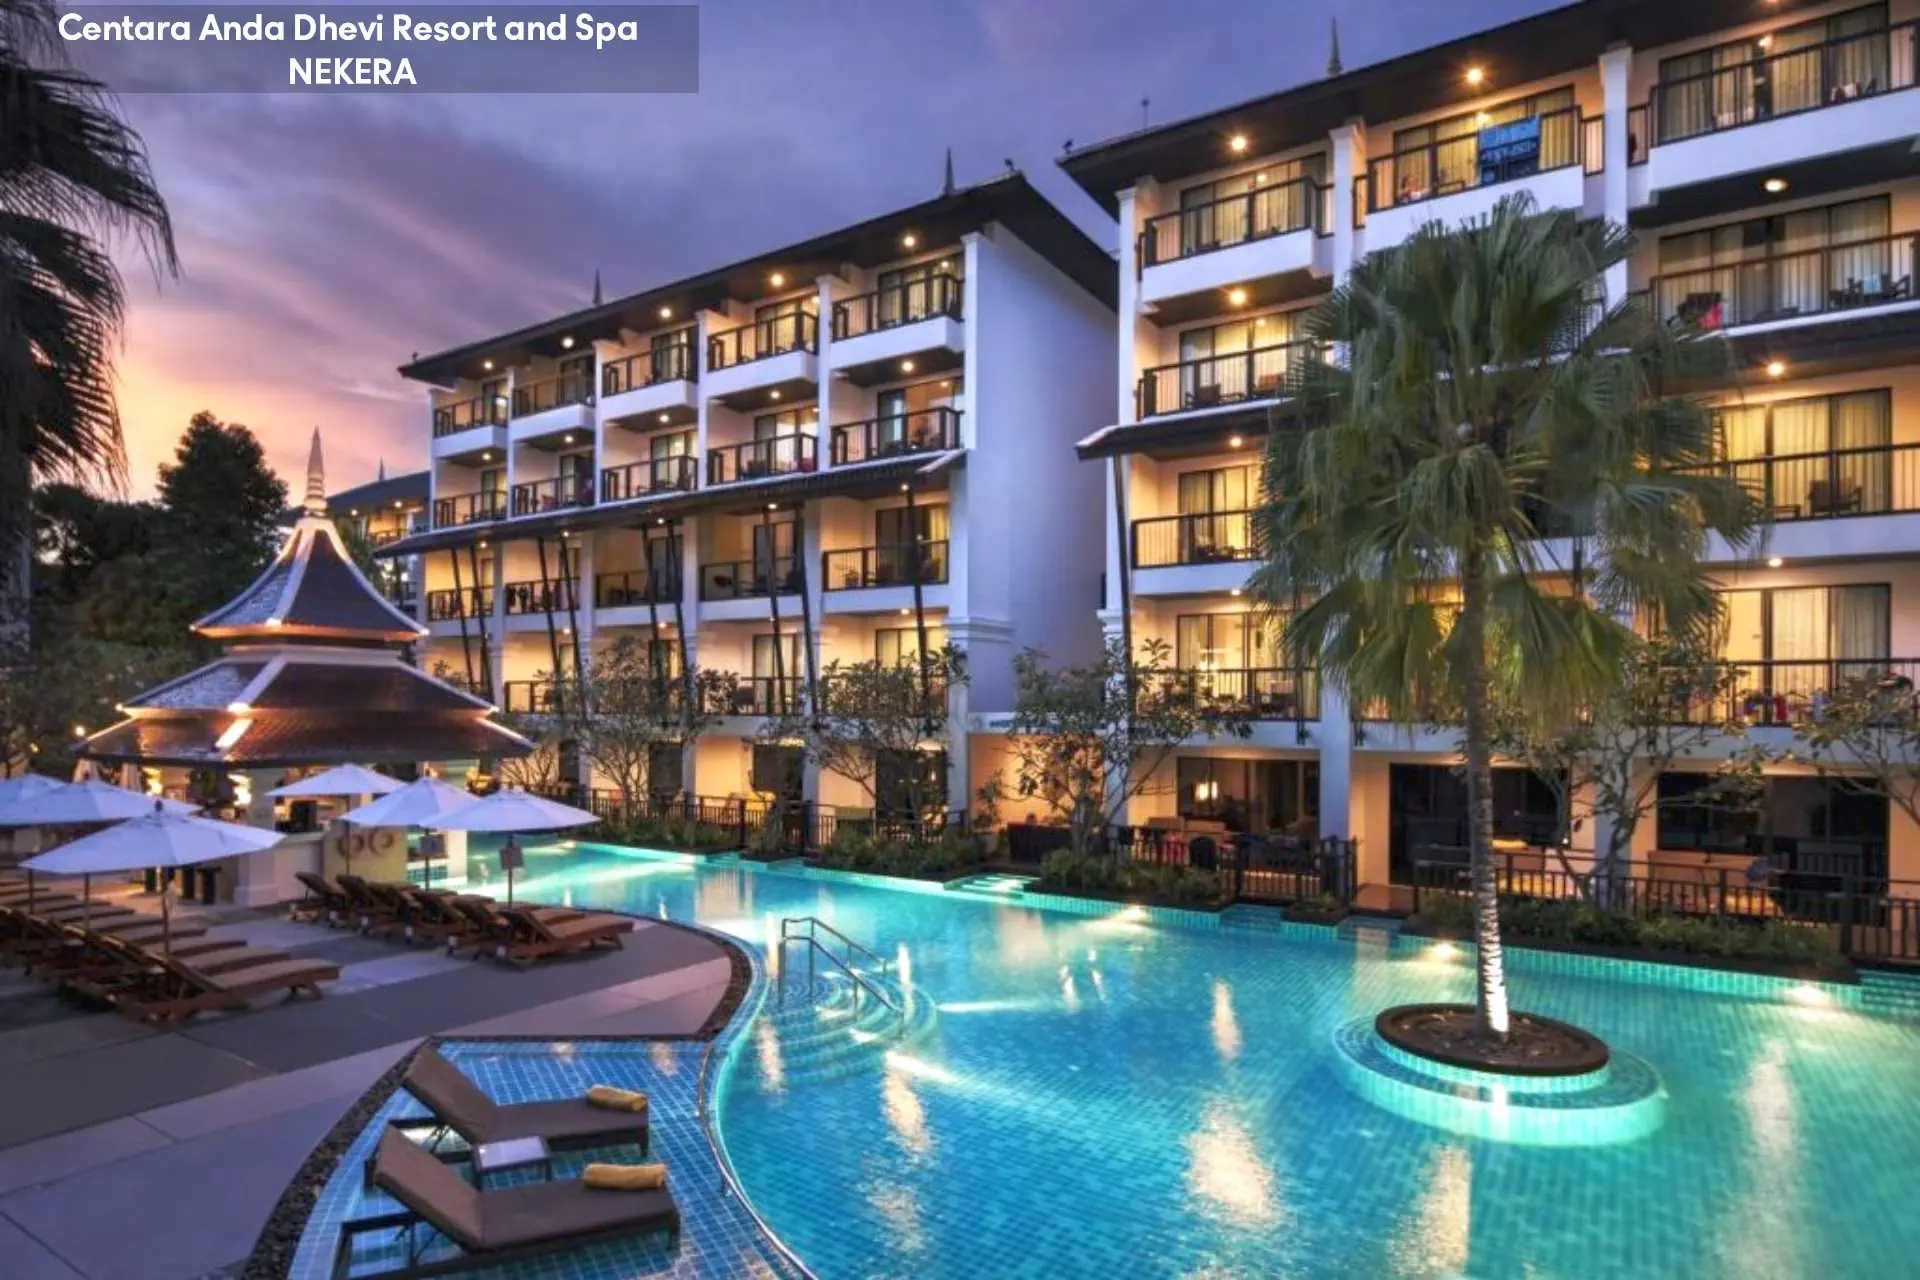 Tajlandia Krabi Ao Nang Beach Centara Anda Dhevi Resort and Spa Krabi